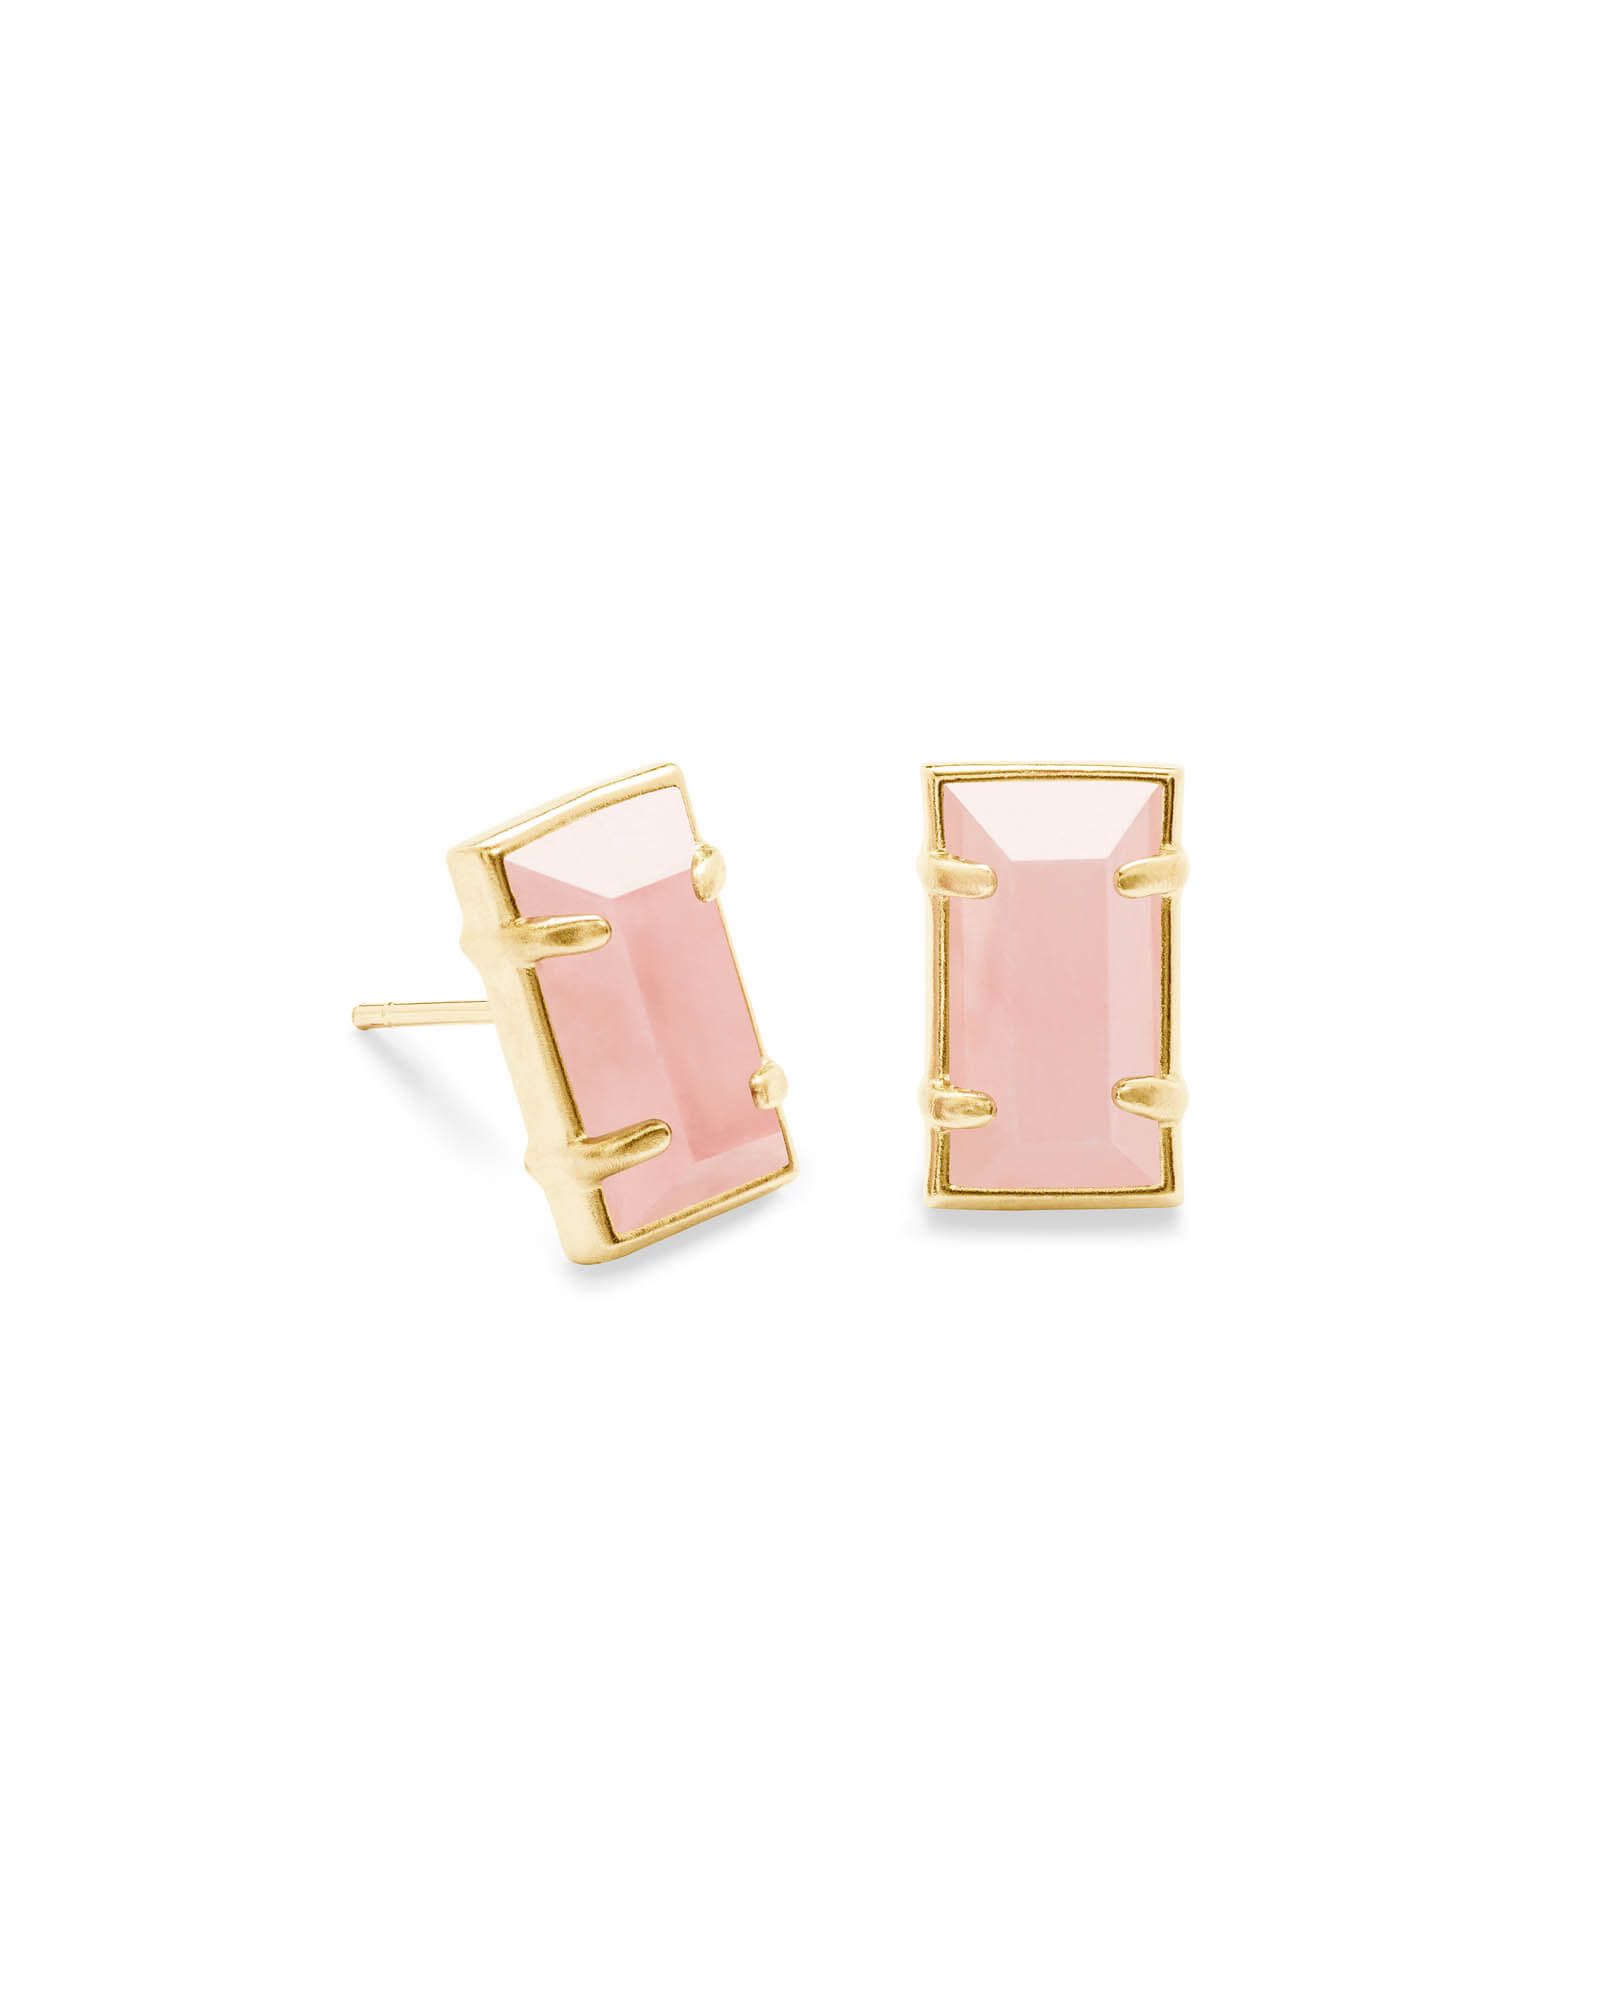 Paola Gold Stud Earrings in Rose Quartz | Kendra Scott